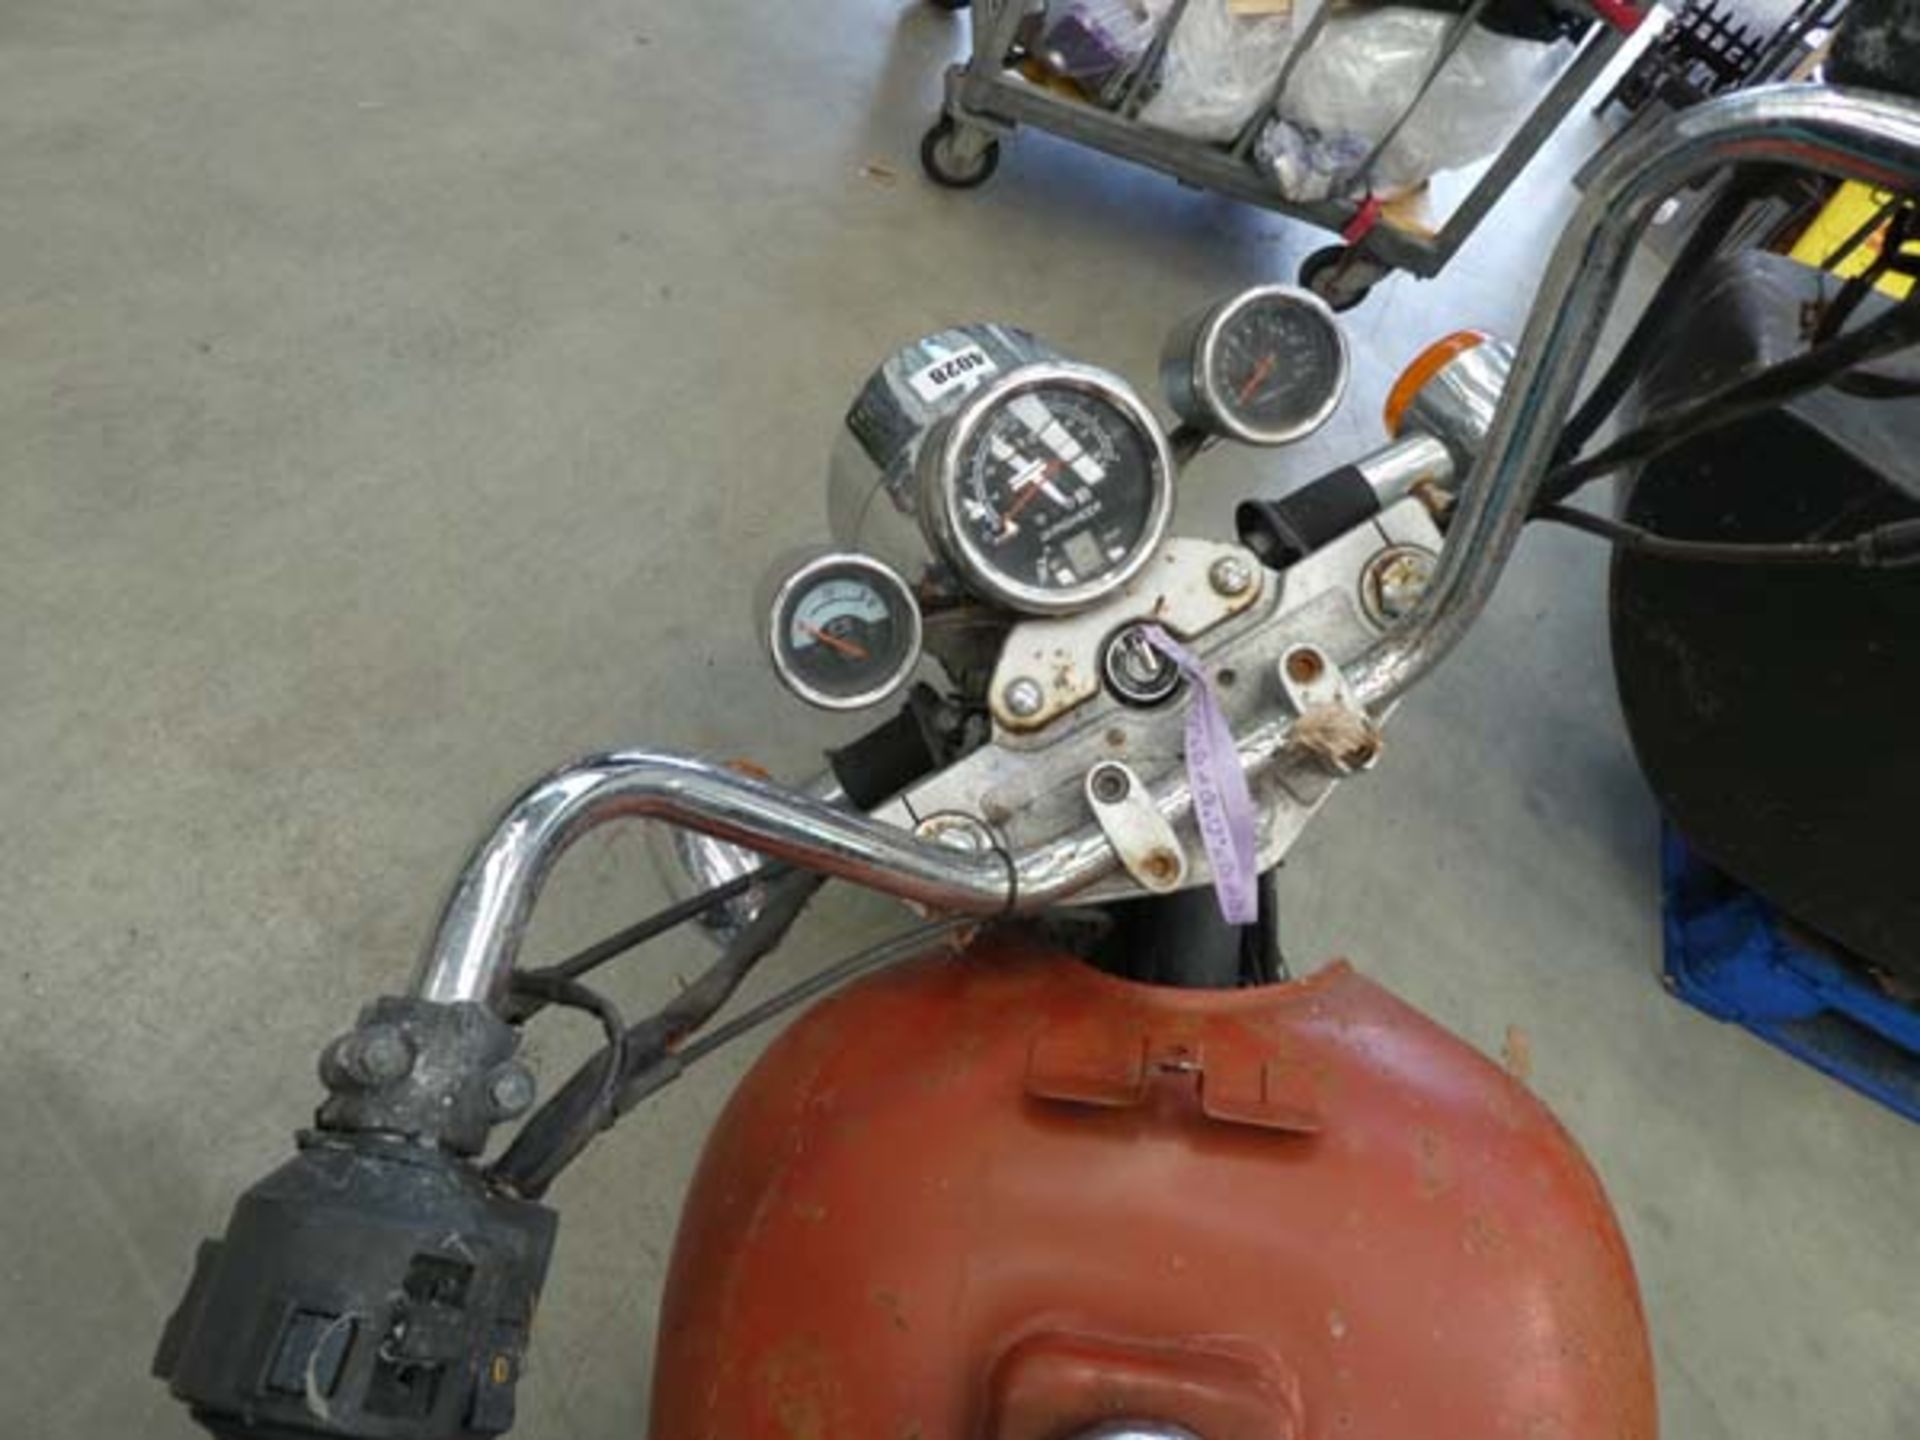 Pioneer 2008 124cc motorbike in parts - Image 2 of 3